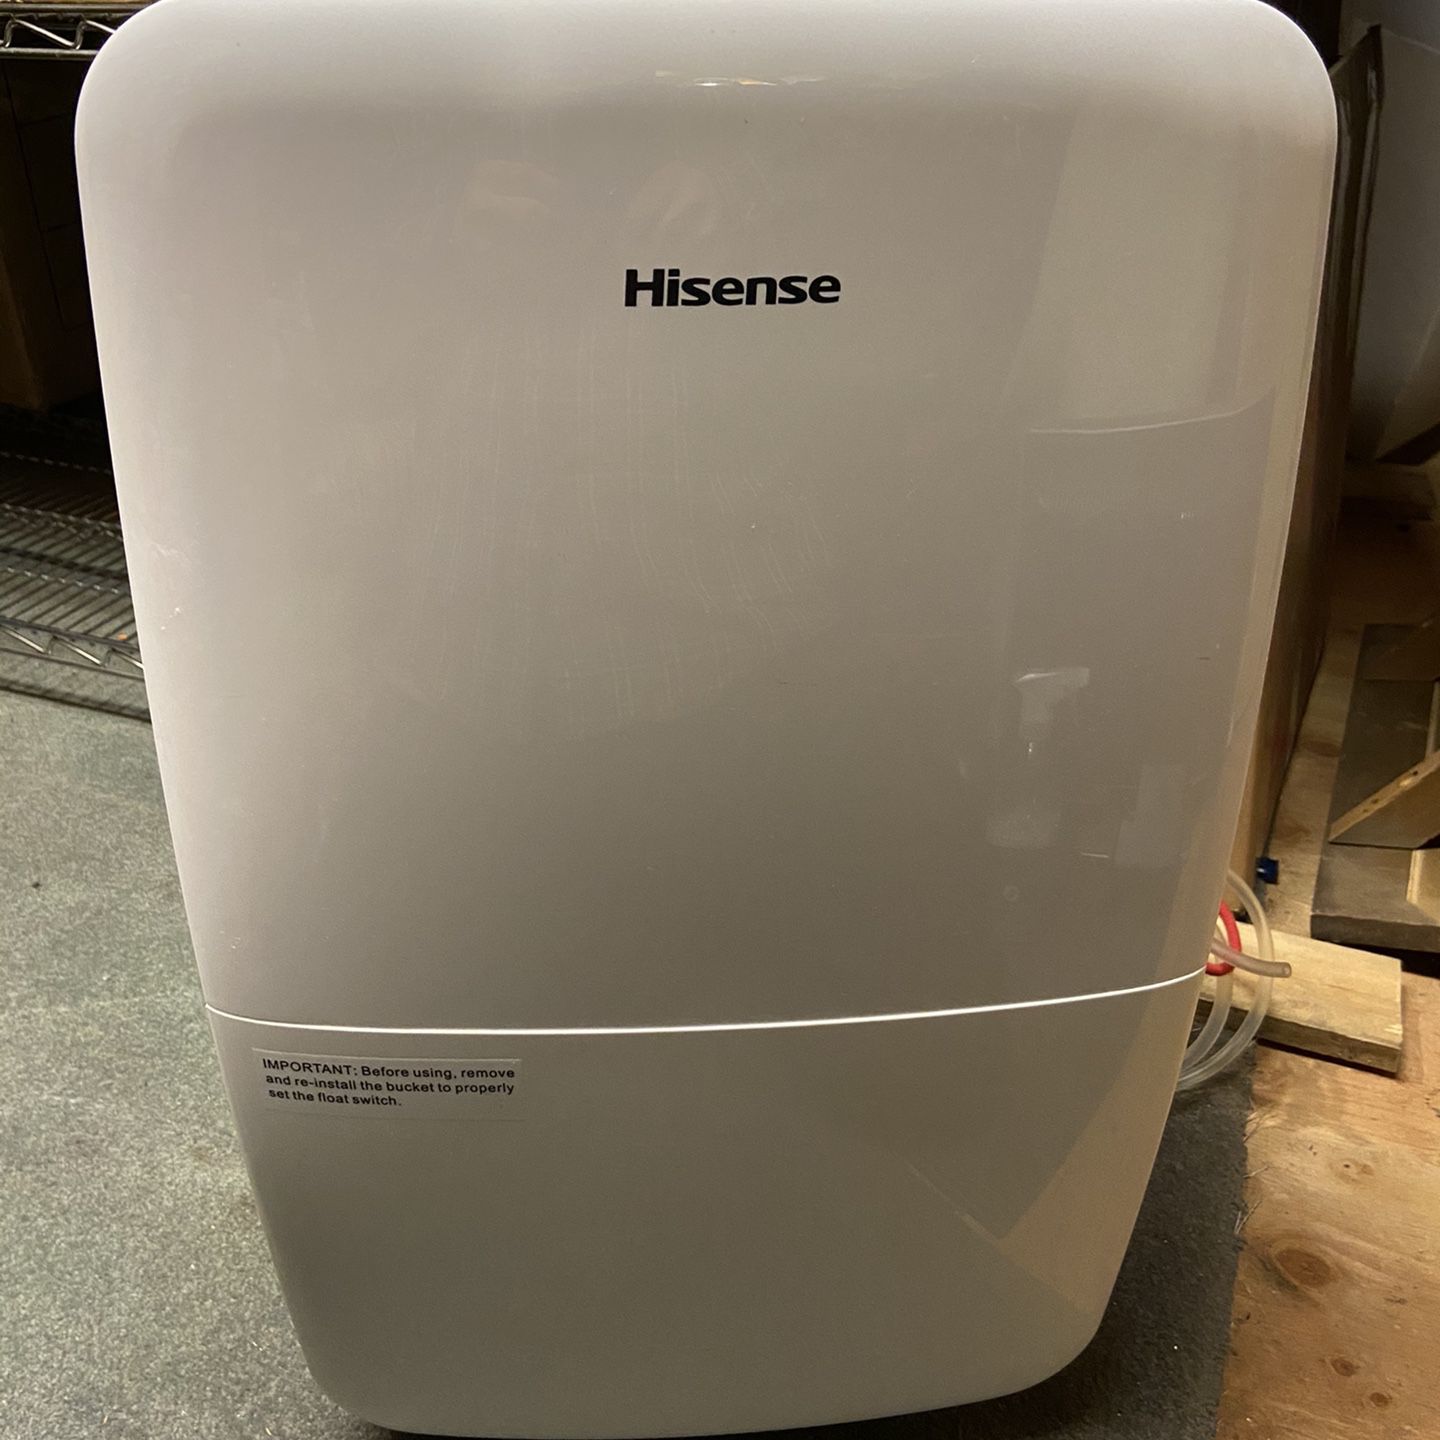 Hisense Dehumidifier In Great Condition